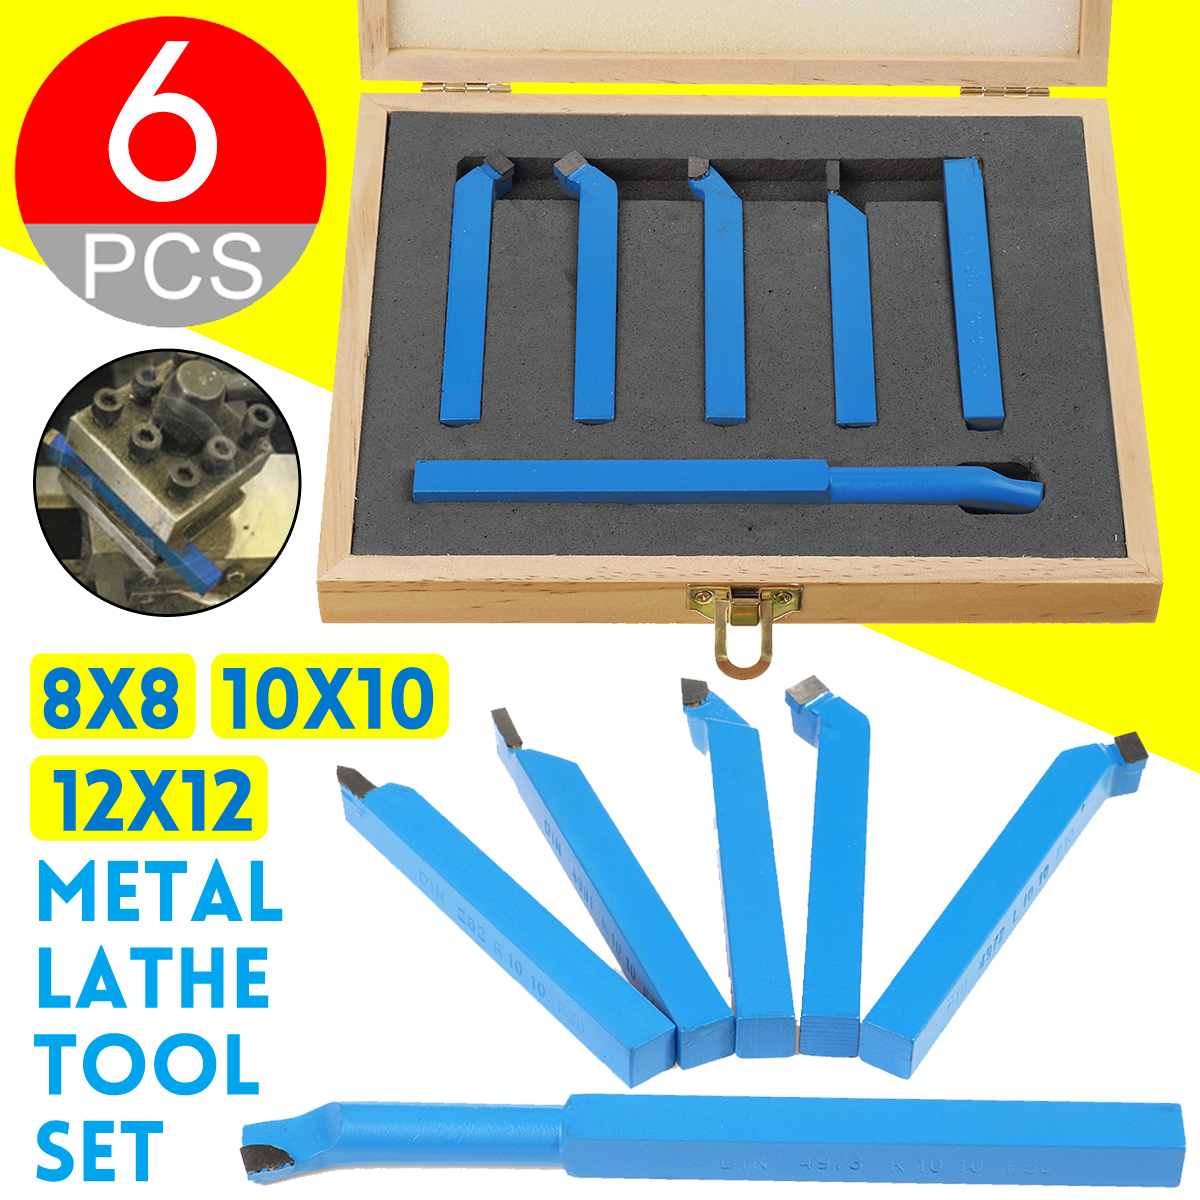 6pcs-81012mm-Carbide-Lathe-Tool-Set-Cutting-Turning-Boring-CNC-Bit-1708142-4